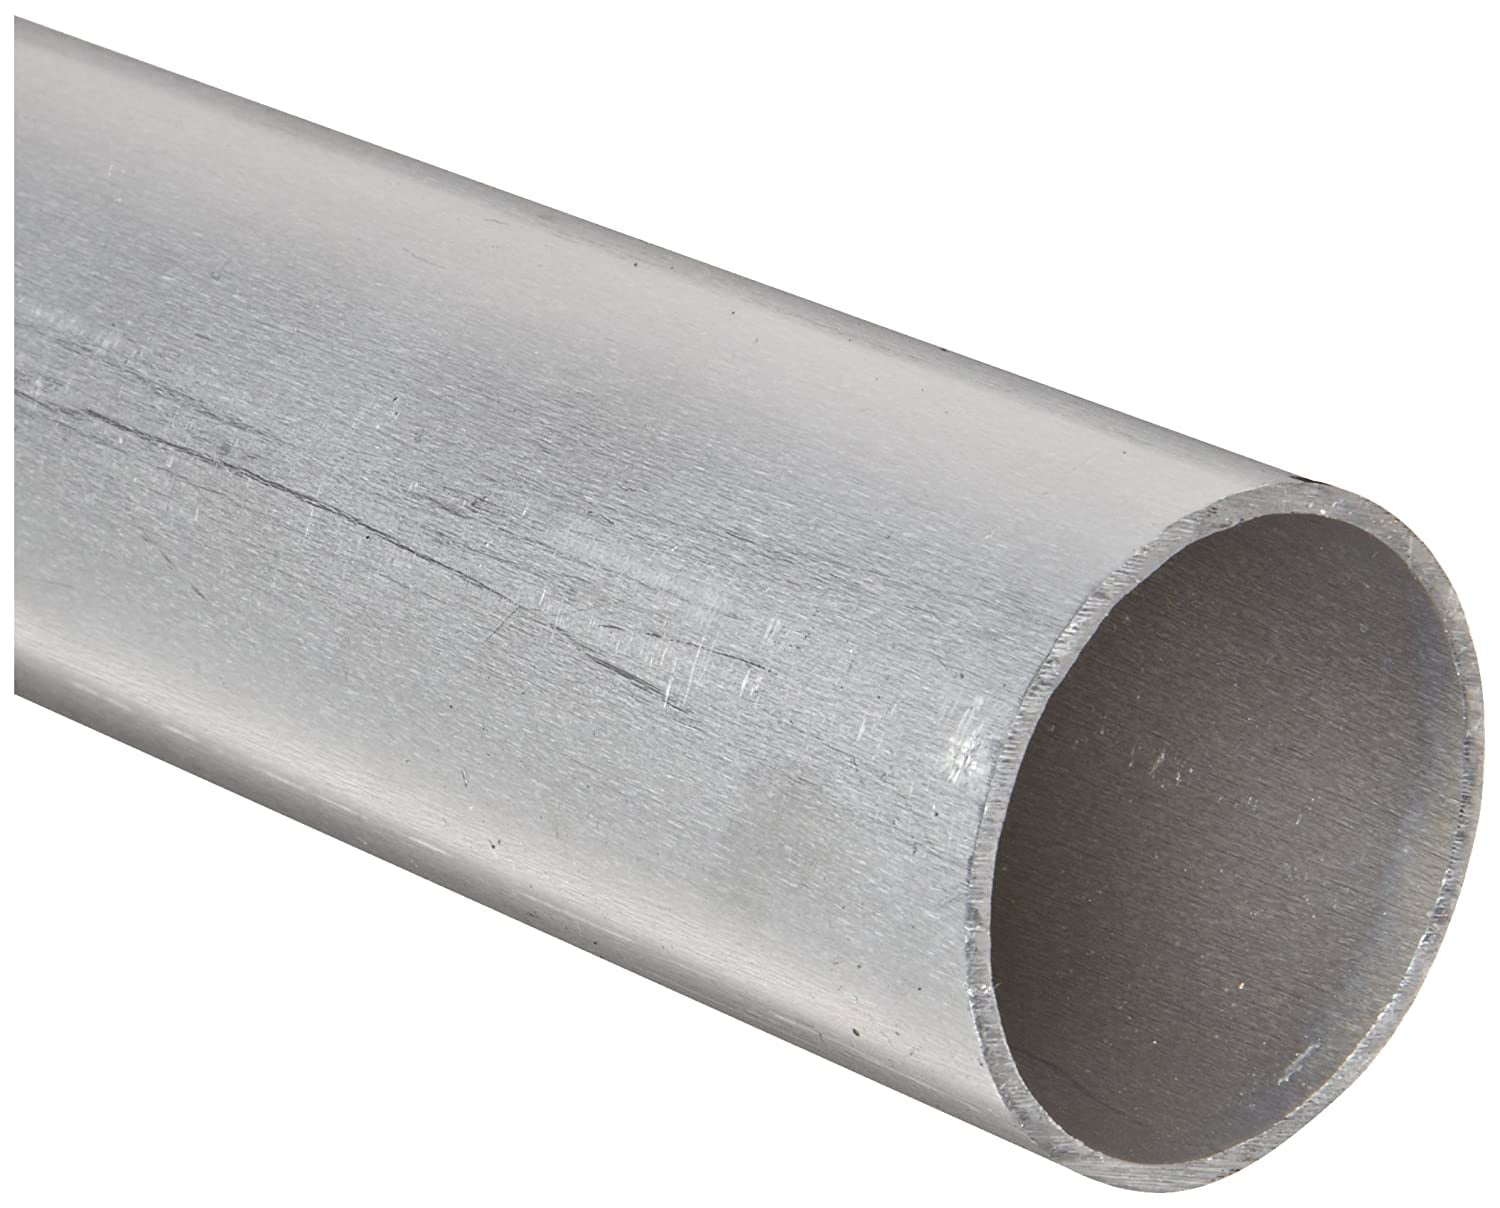 2pc Φ38xΦ20mm Aluminum 6061 Round Tube OD38mm ID20mm Any LengthTubing Tooling T6 